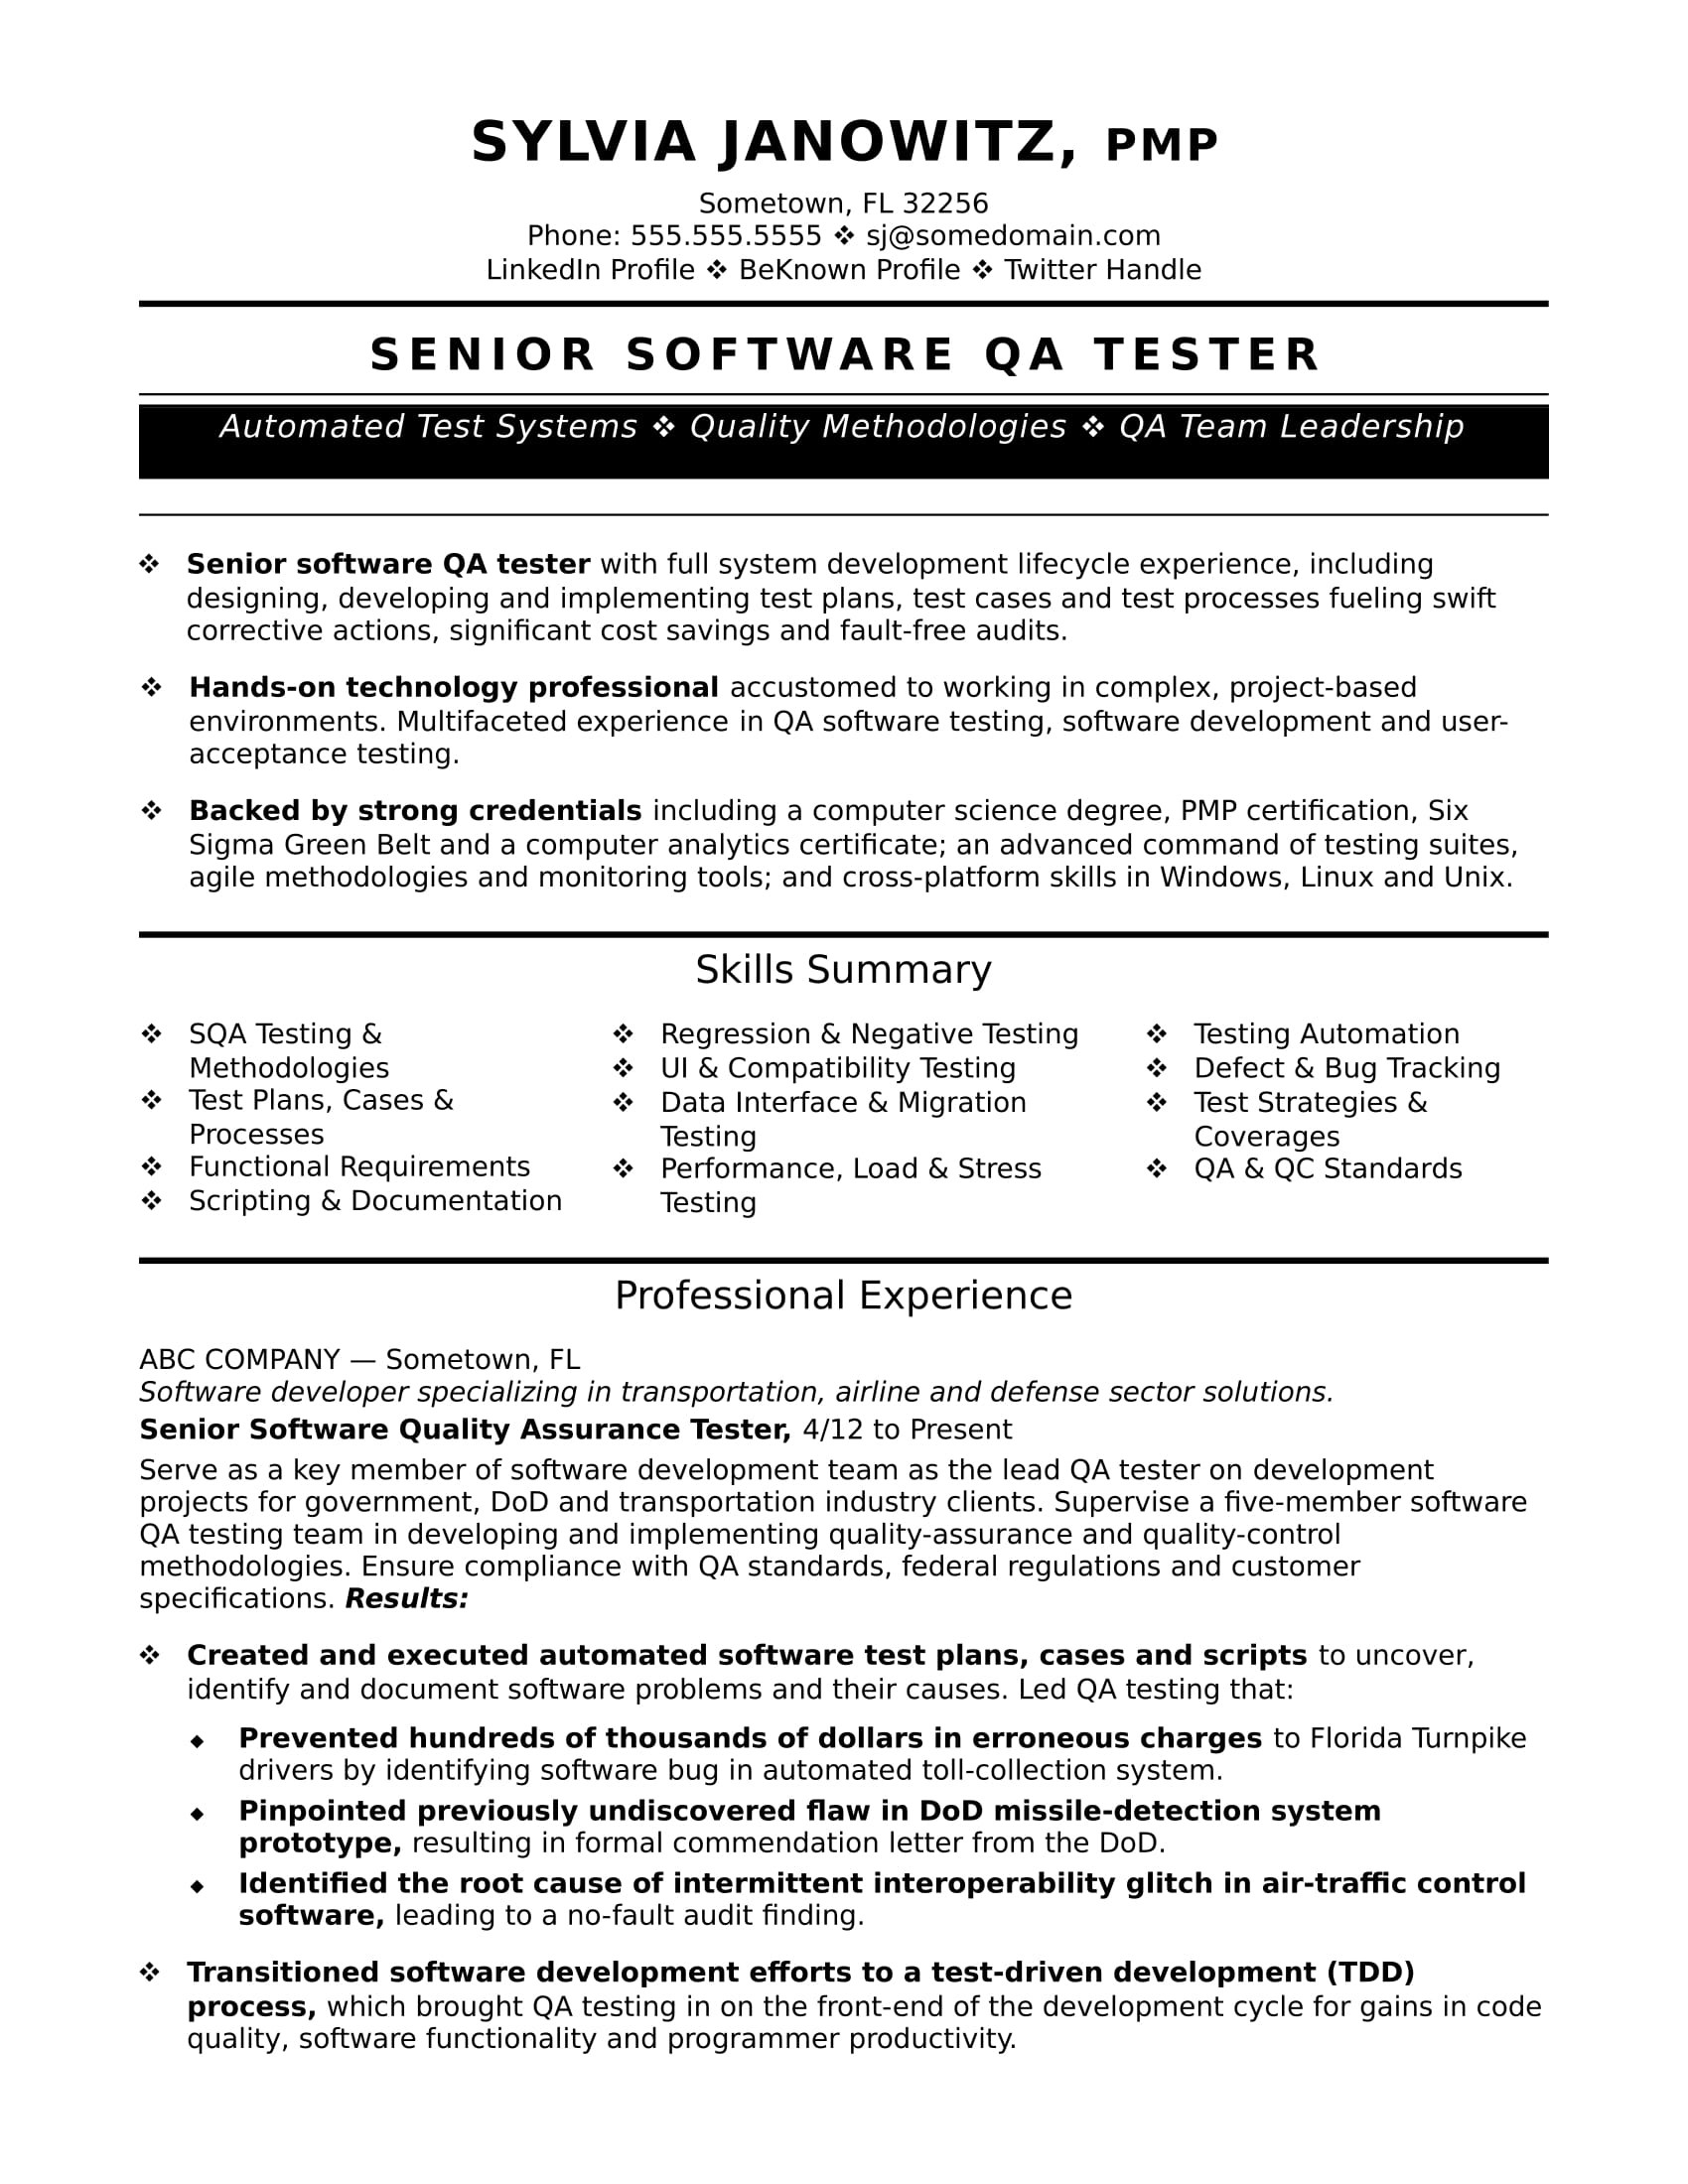 Software Testing Resume for Fresher Samples Experienced Qa software Tester Resume Sample Monster.com